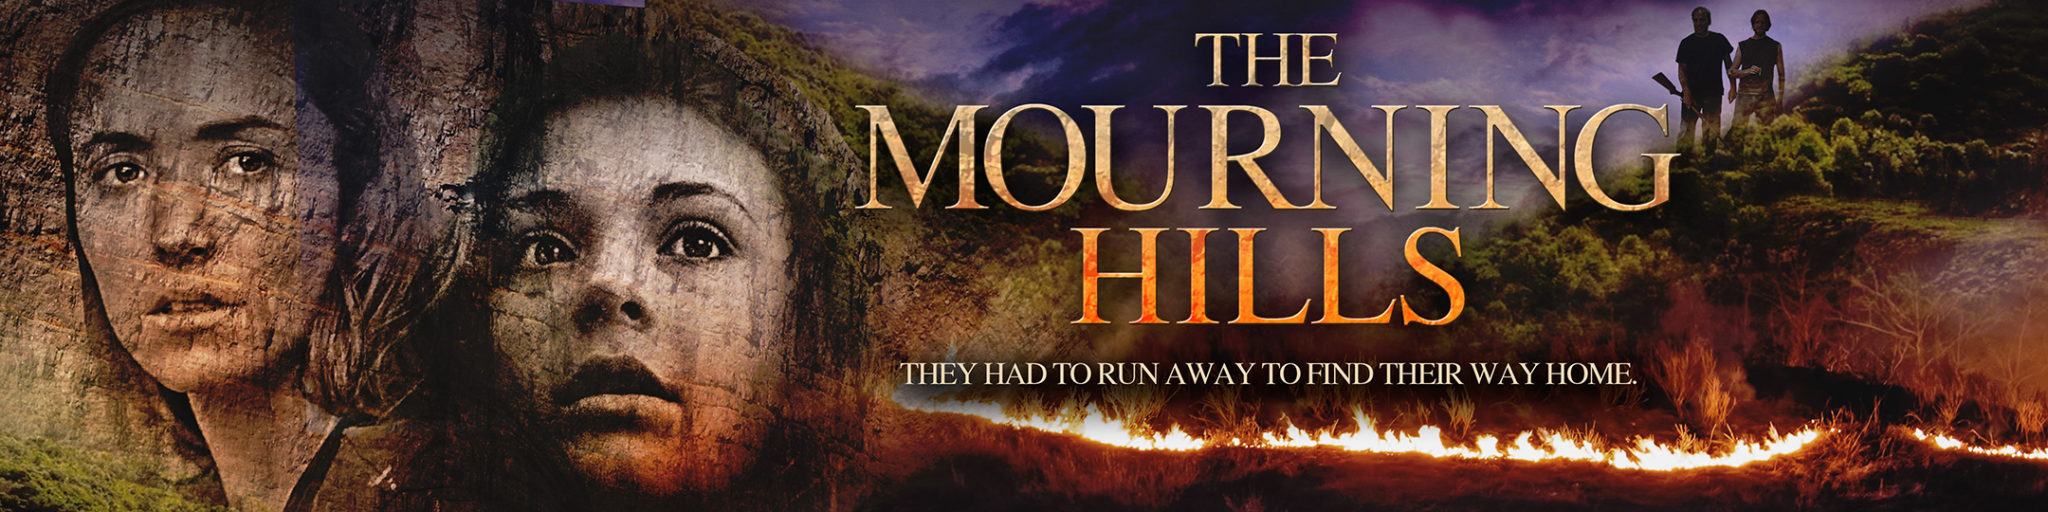 Mourning-Hills_banner